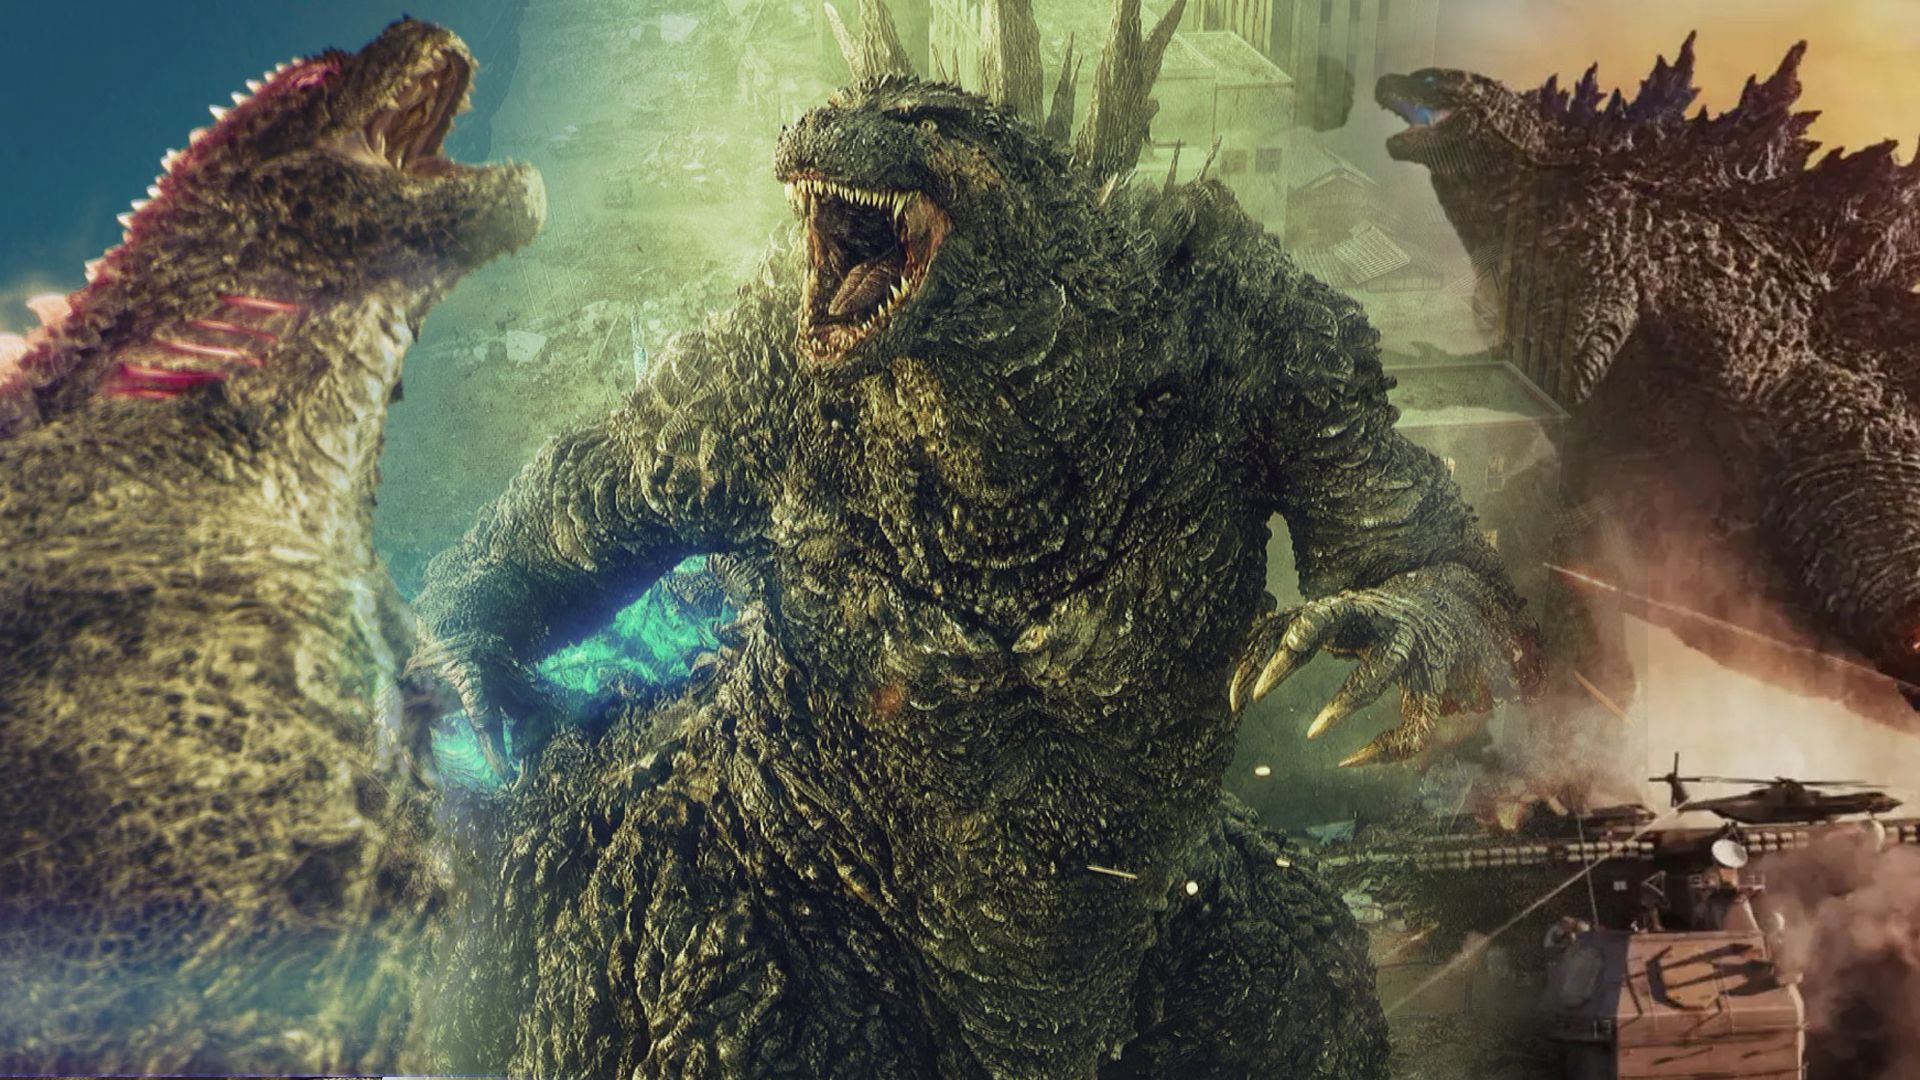 A custom image of Godzilla